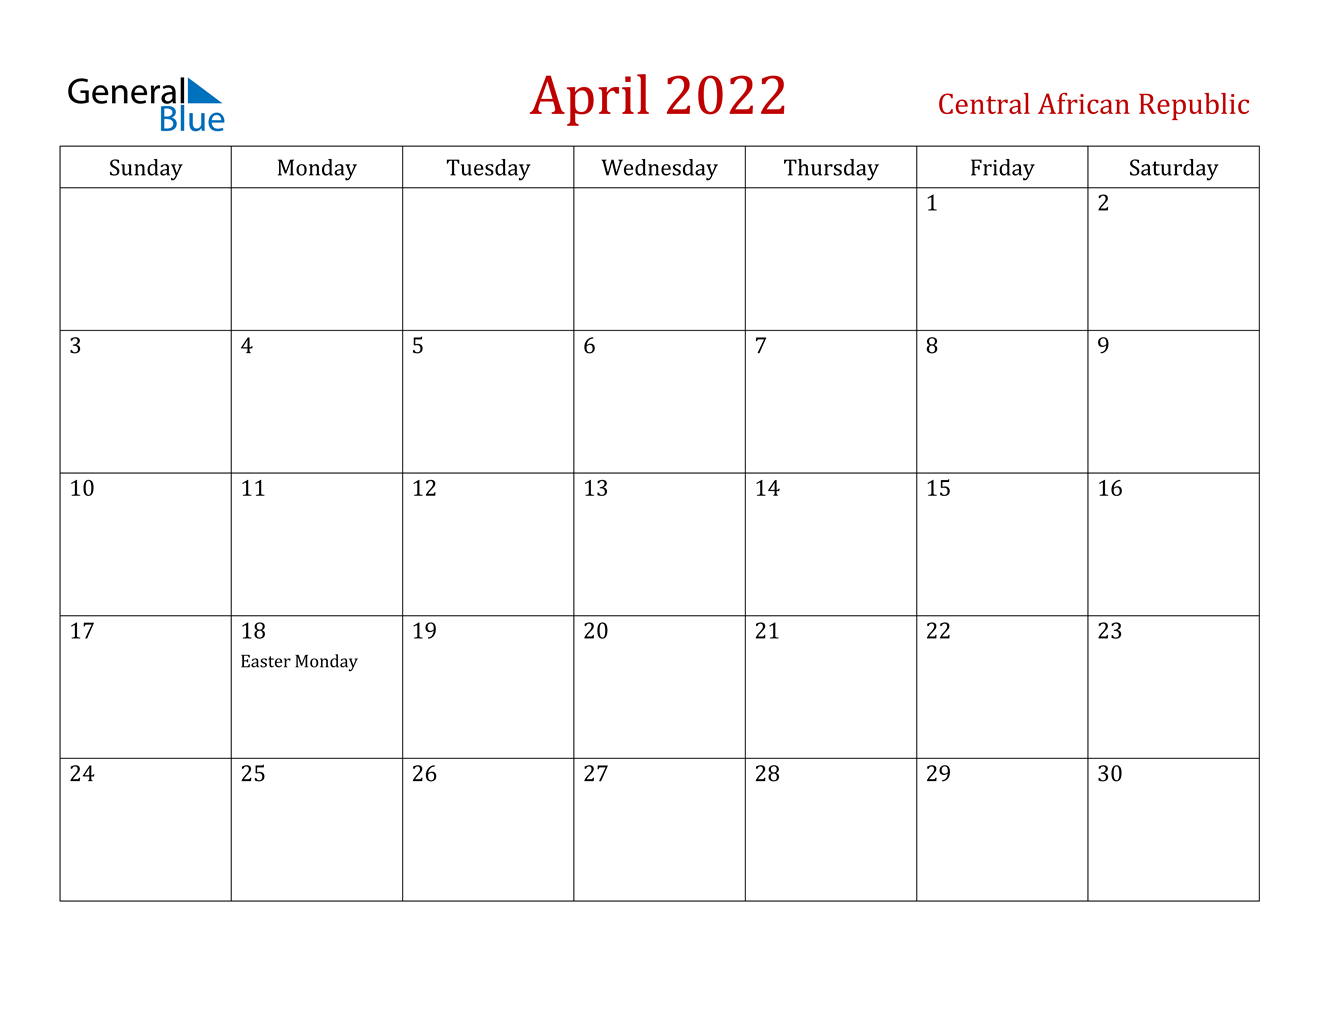 April 2022 Calendar - Central African Republic